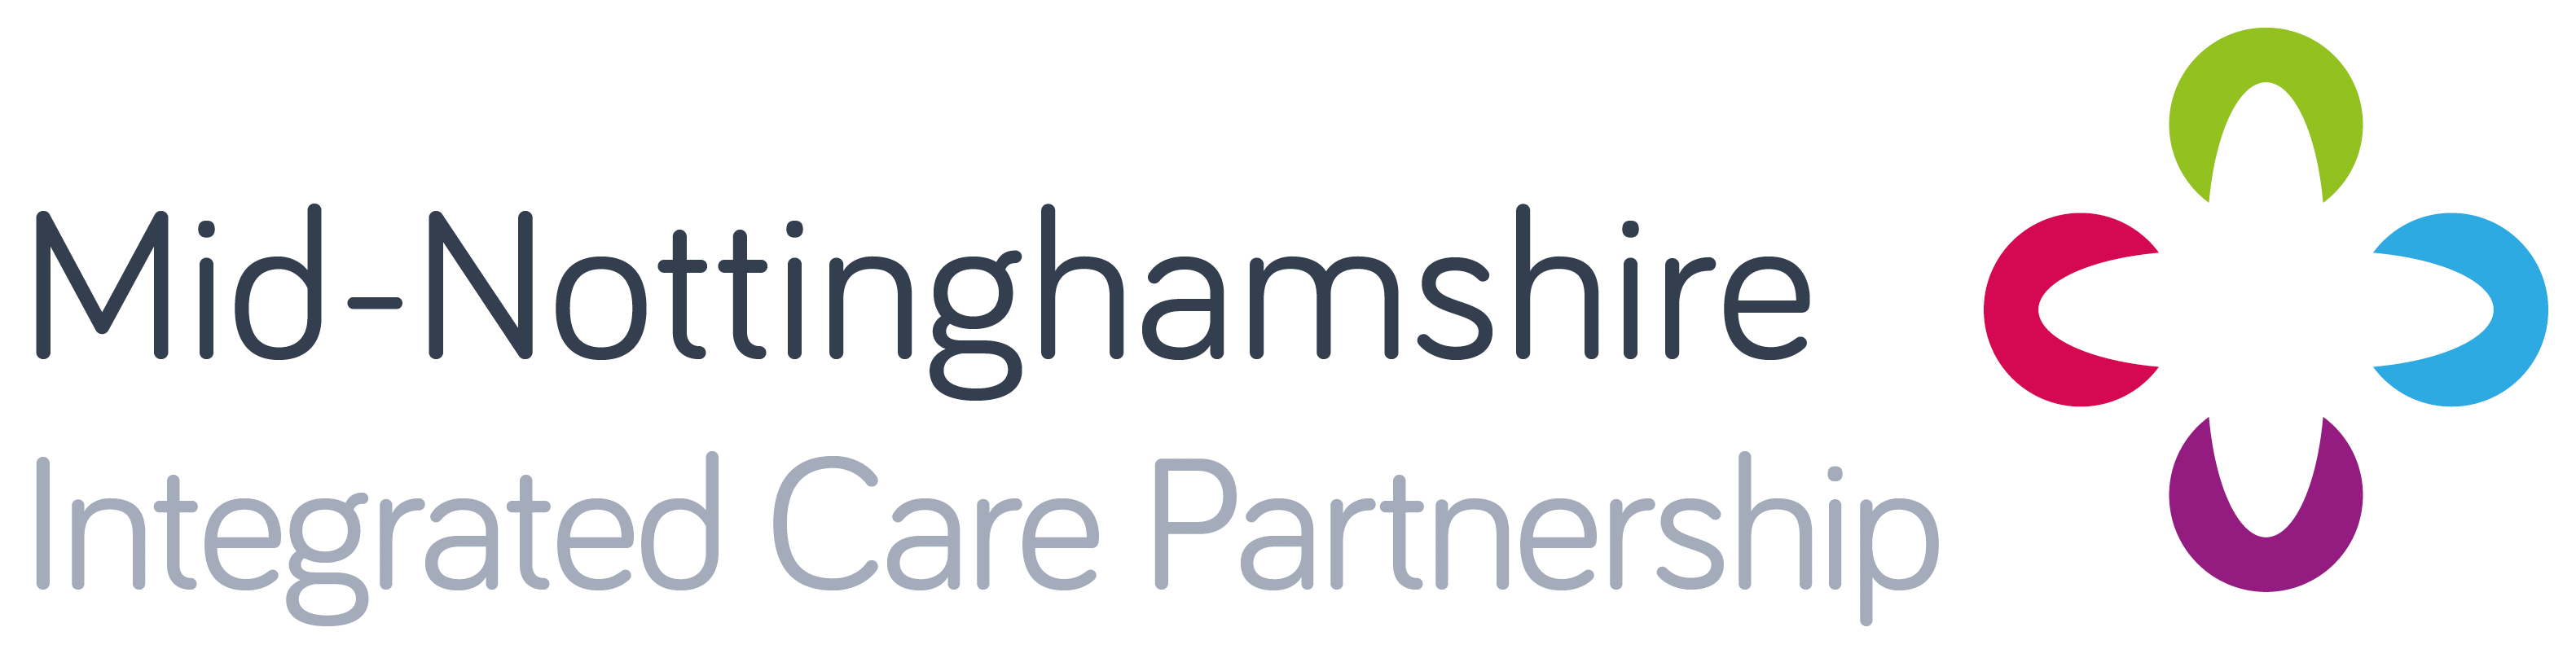 Mid-Nottinghamshire PCNs logo